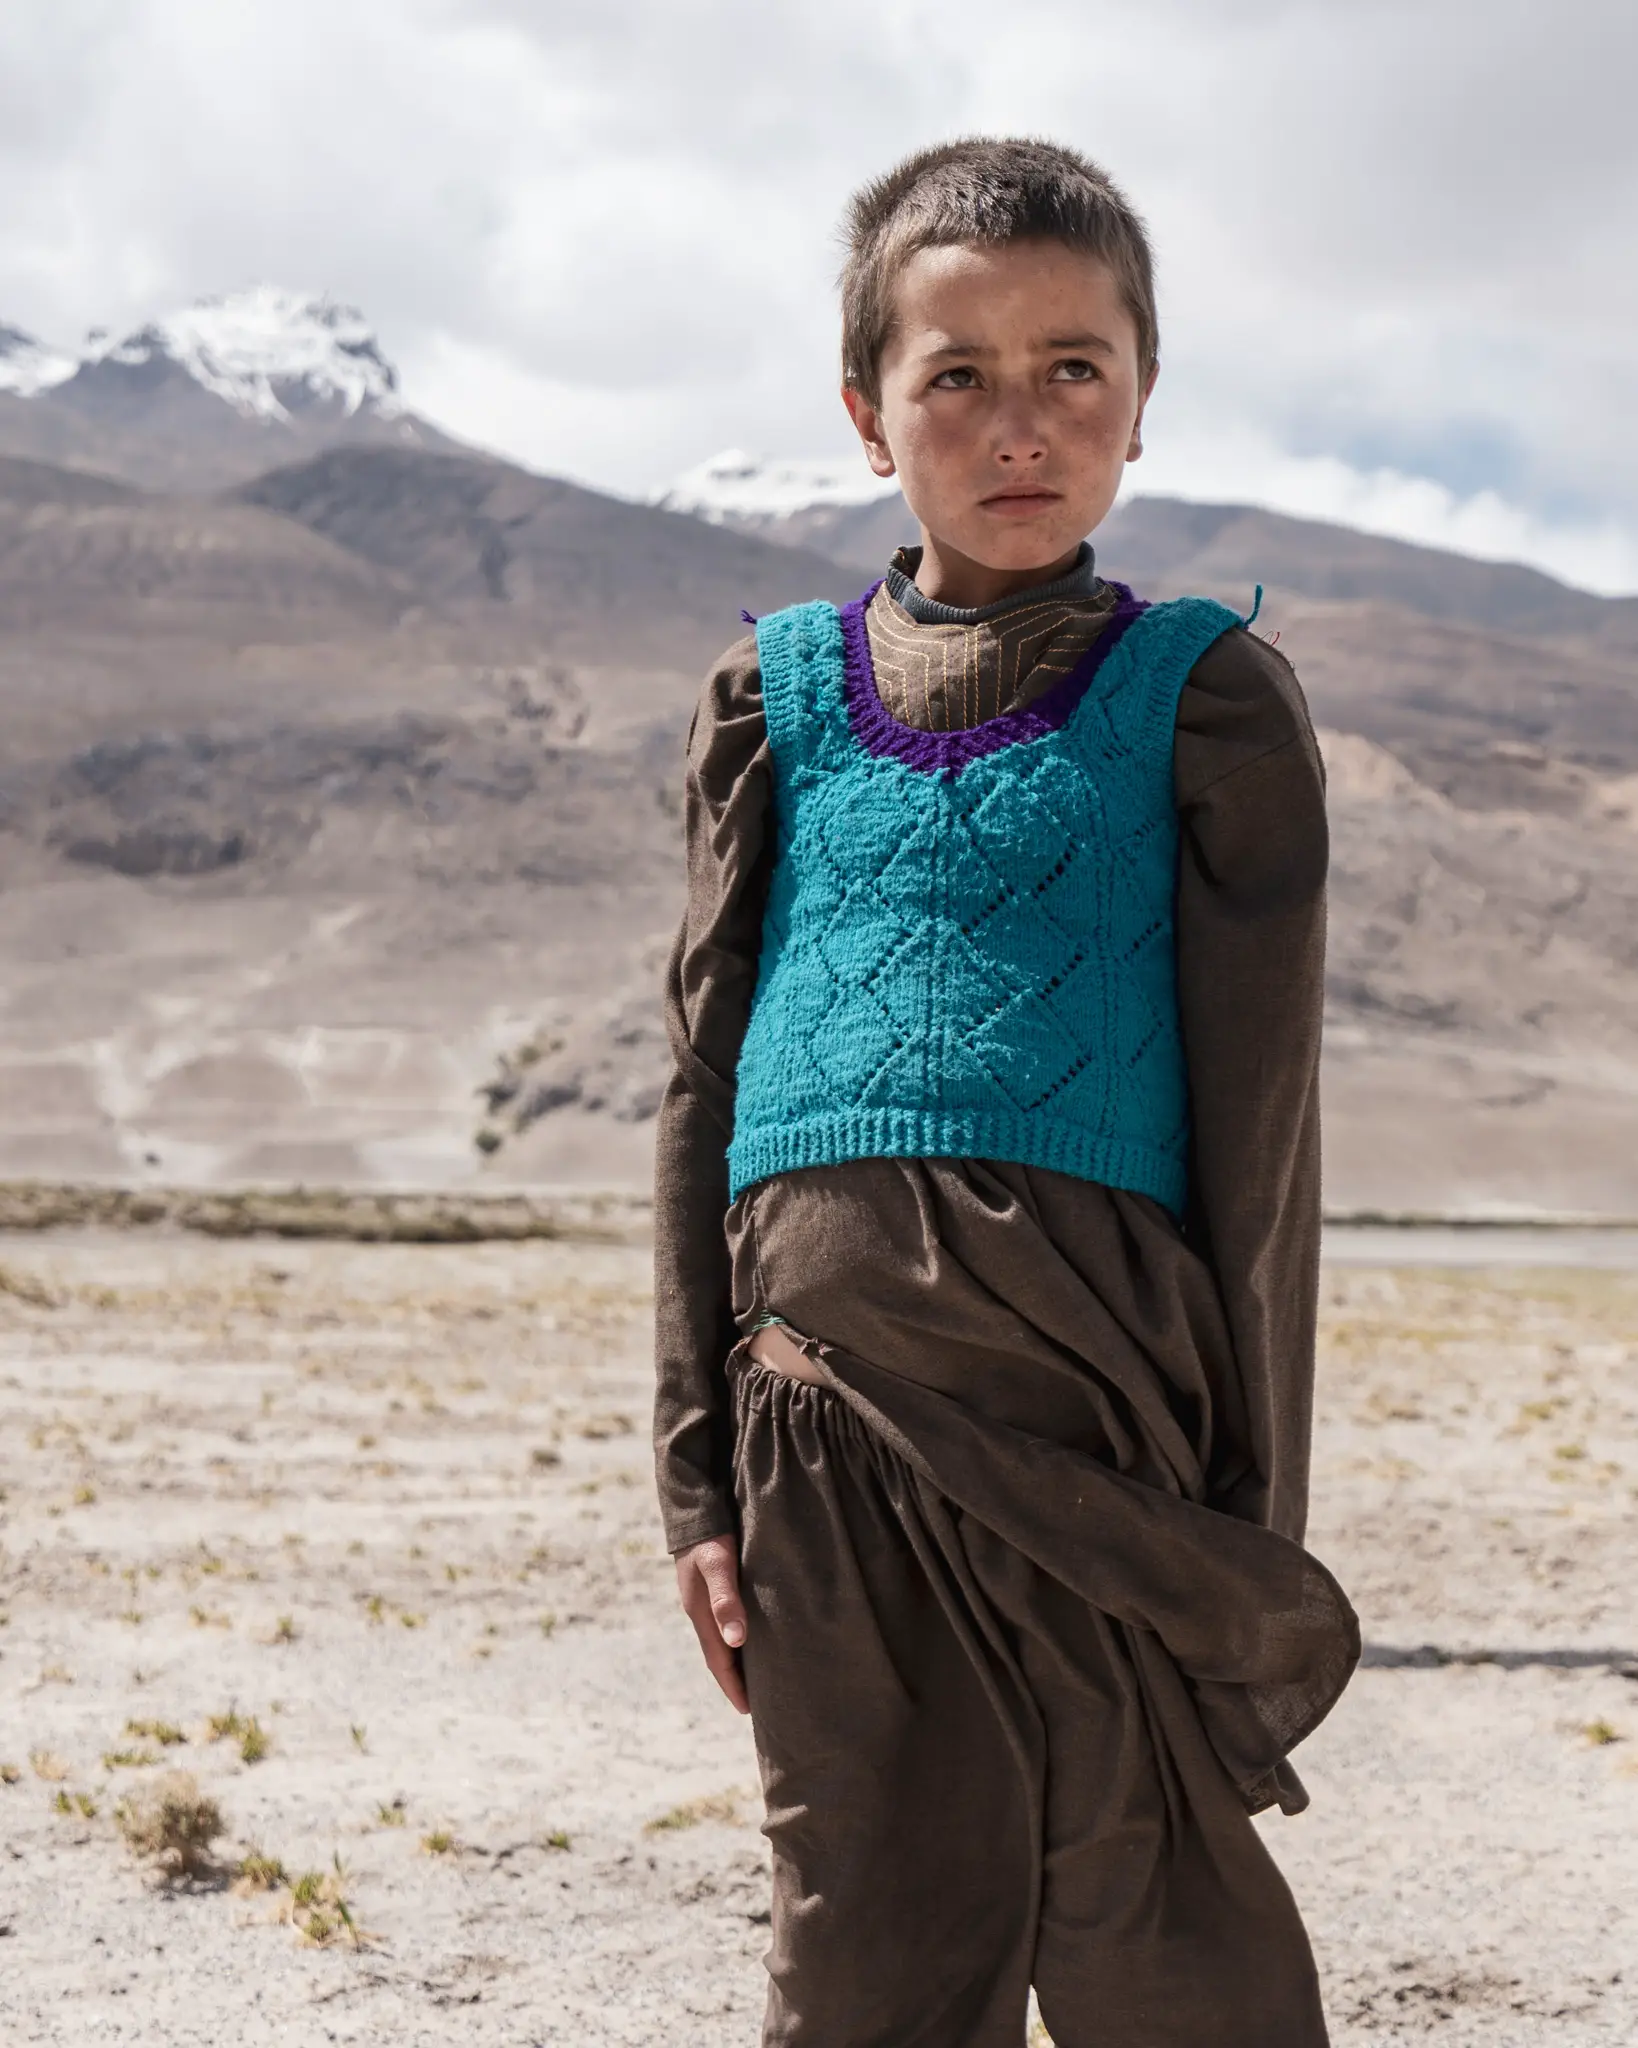 Wakhi boy in Afghanistan's Wakhan Corridor